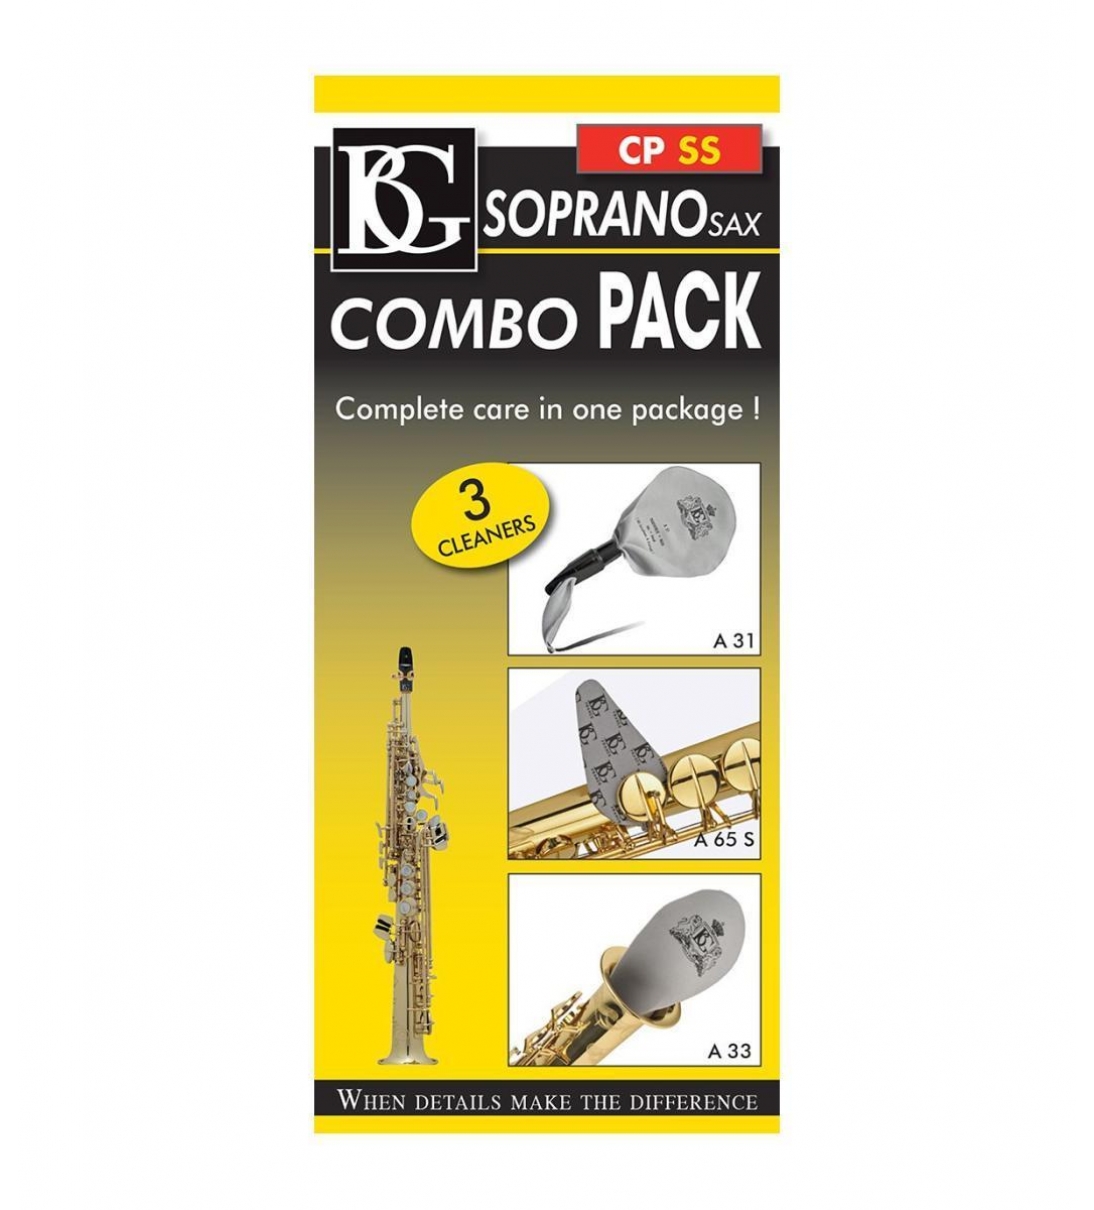 Bg cpss combo pack sax soprano set panni pulizia